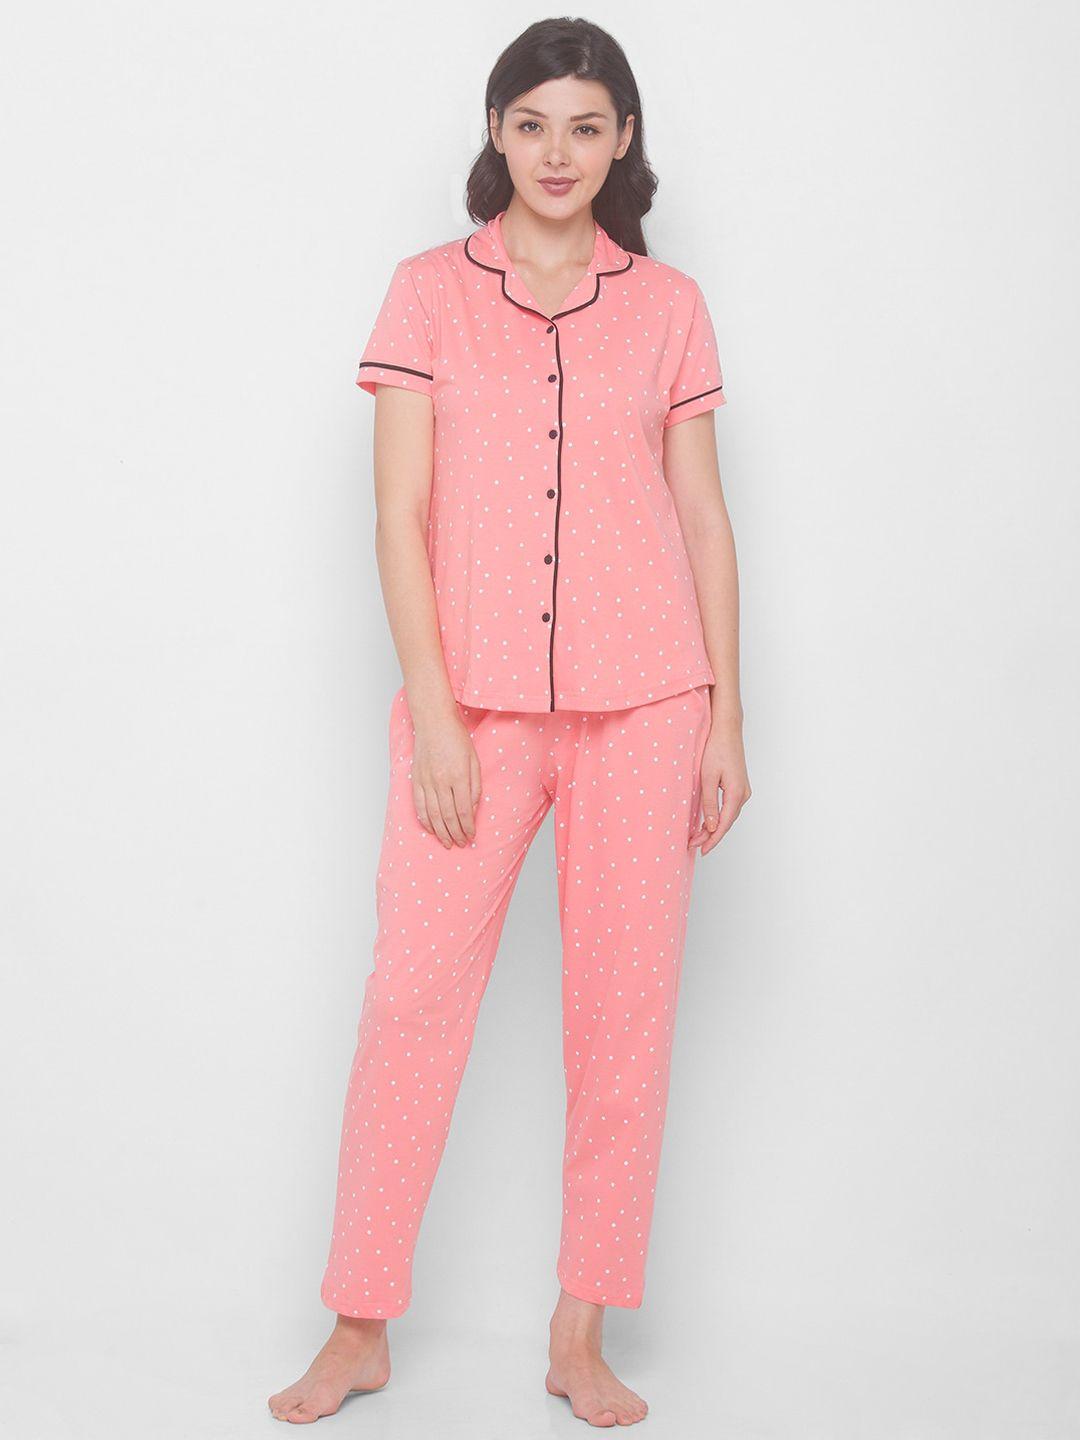 av2-women-peach-coloured-&-white-pure-cotton-polka-dot-printed-night-suit